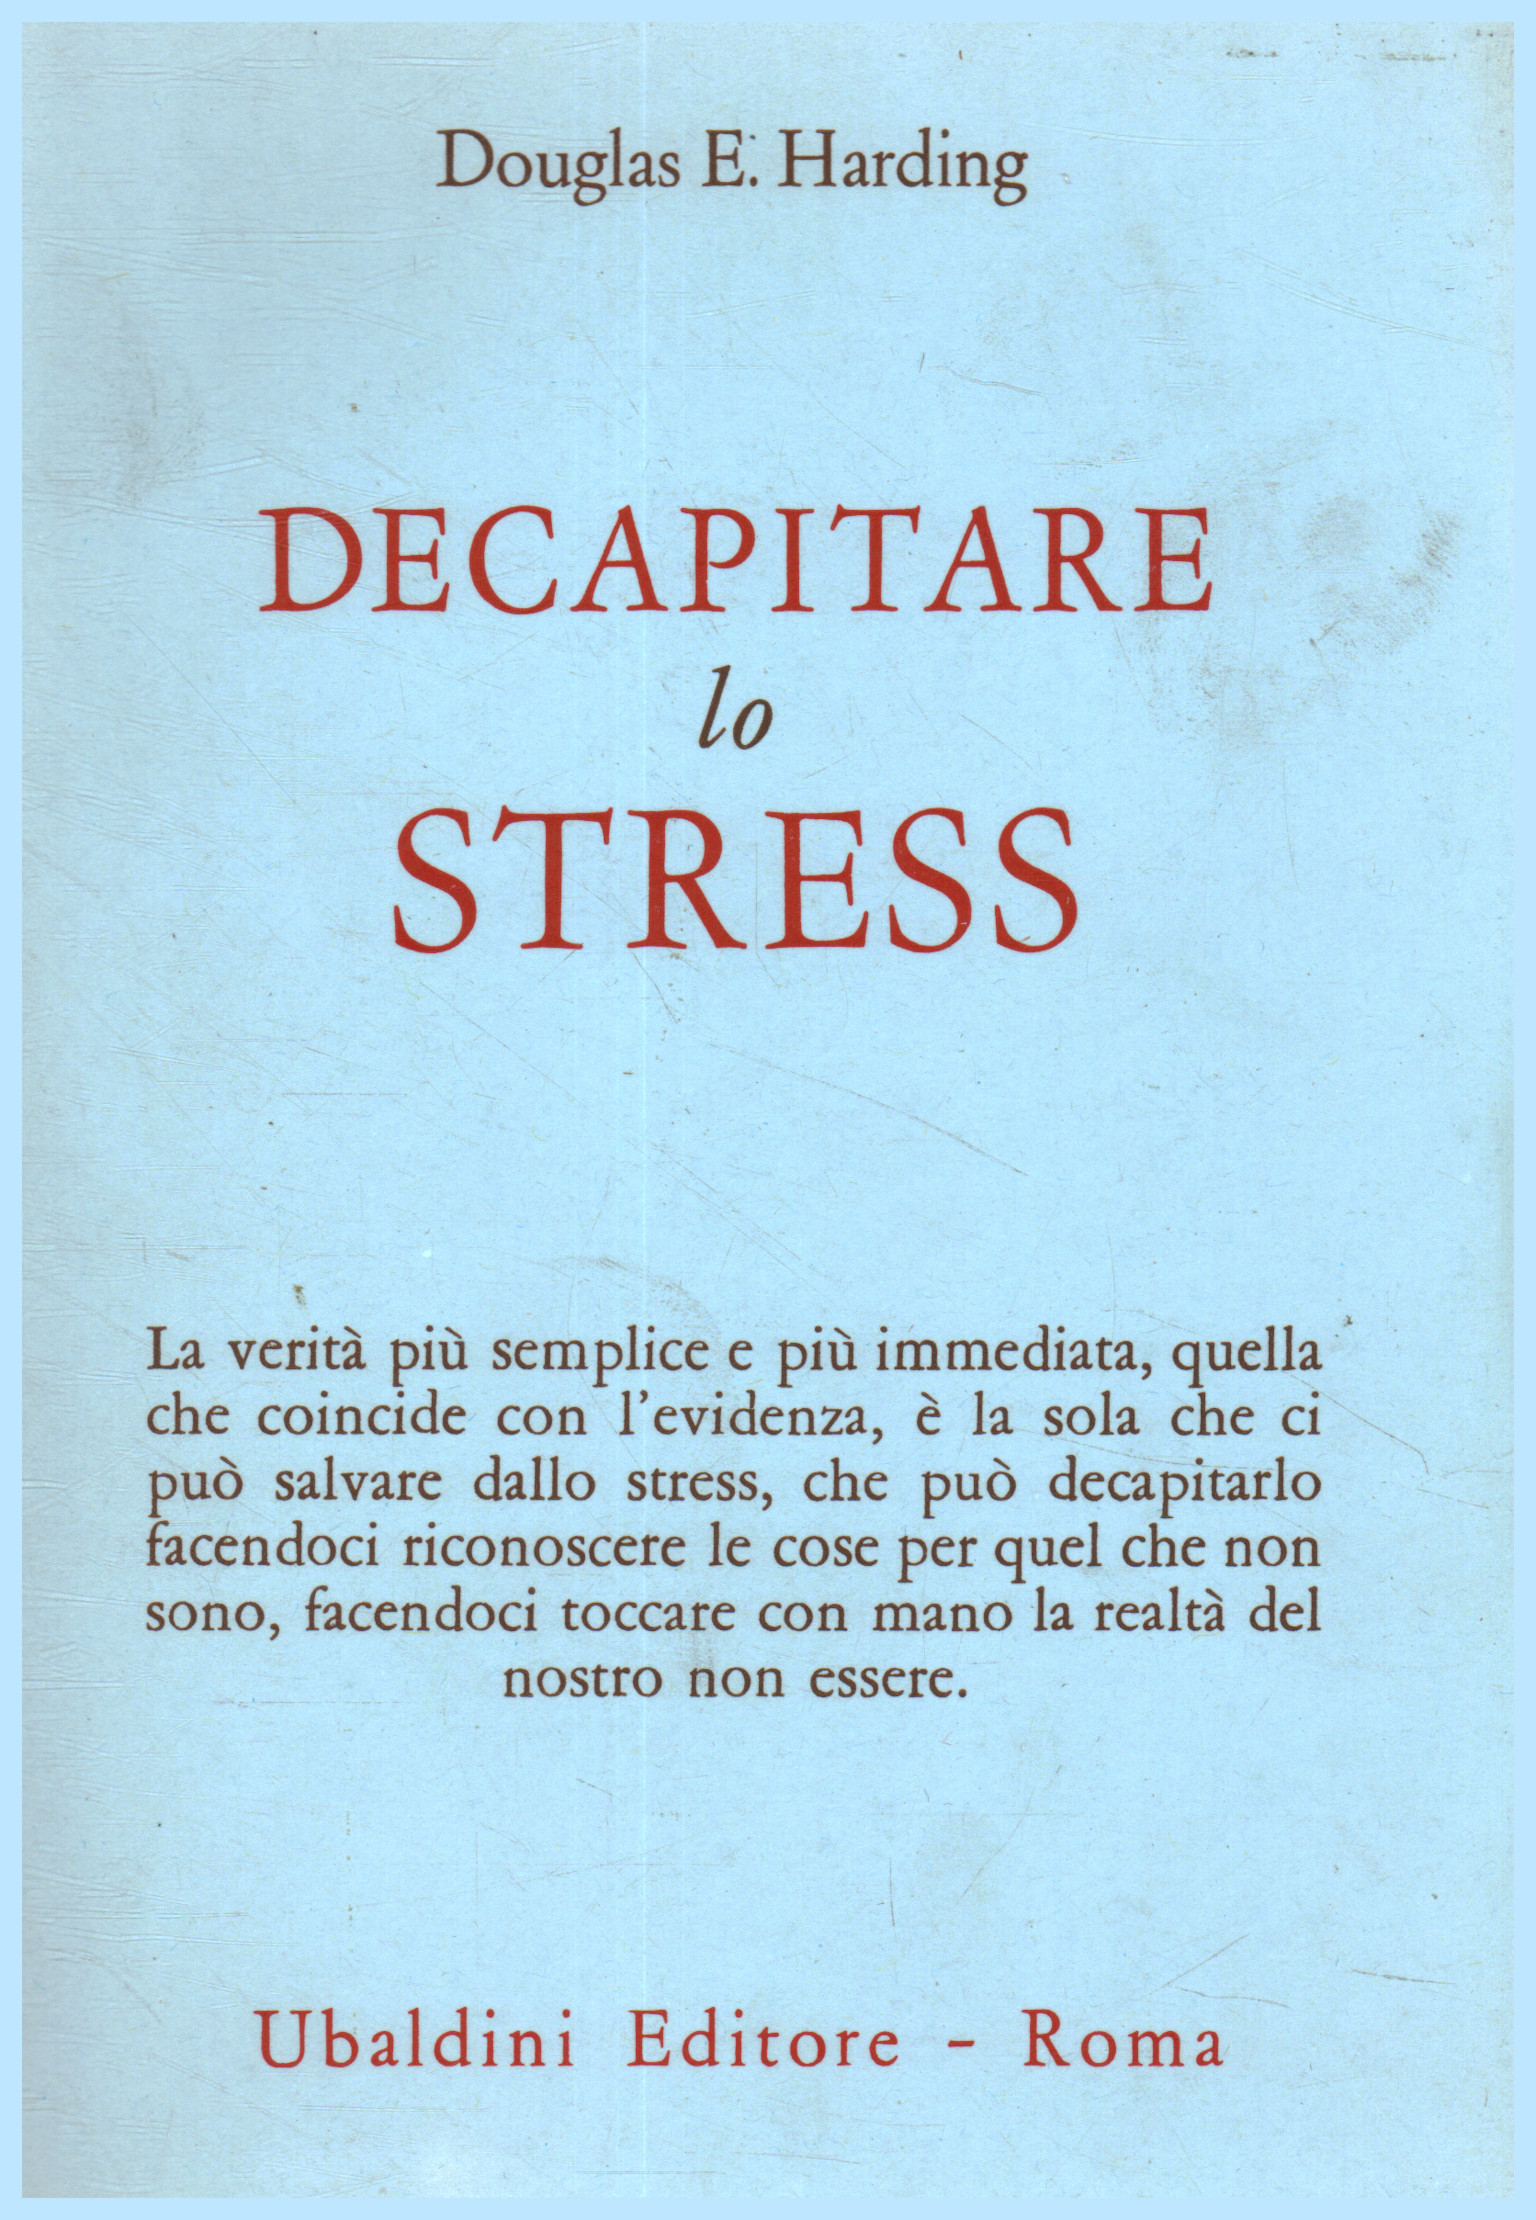 Decapitate stress